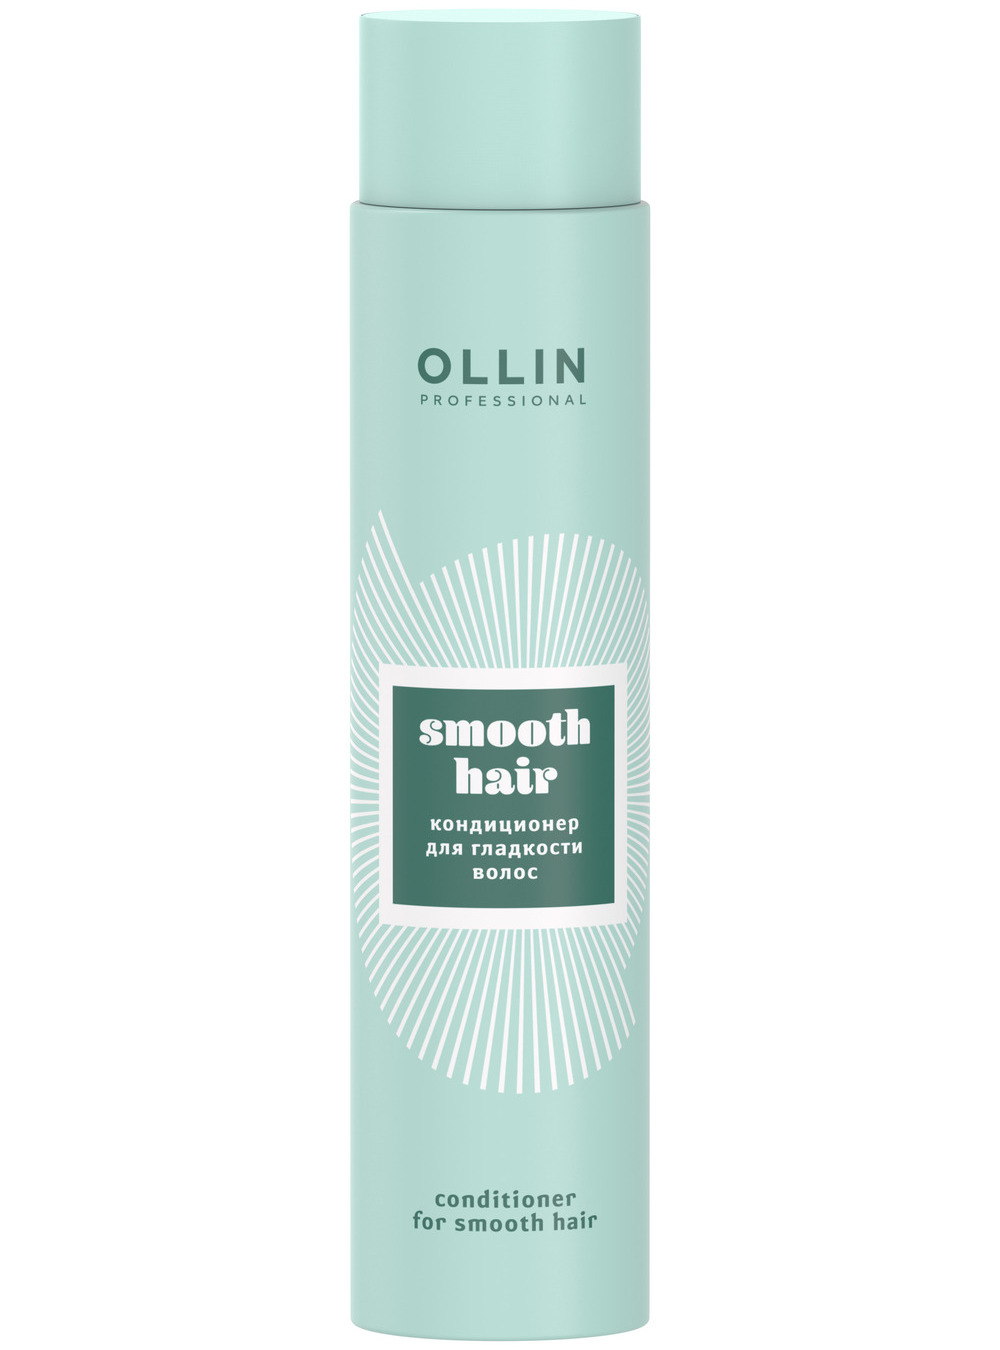 Ollin Professional Кондиционер для гладкости волос, 300 мл (Ollin Professional, Curl & Smooth Hair)